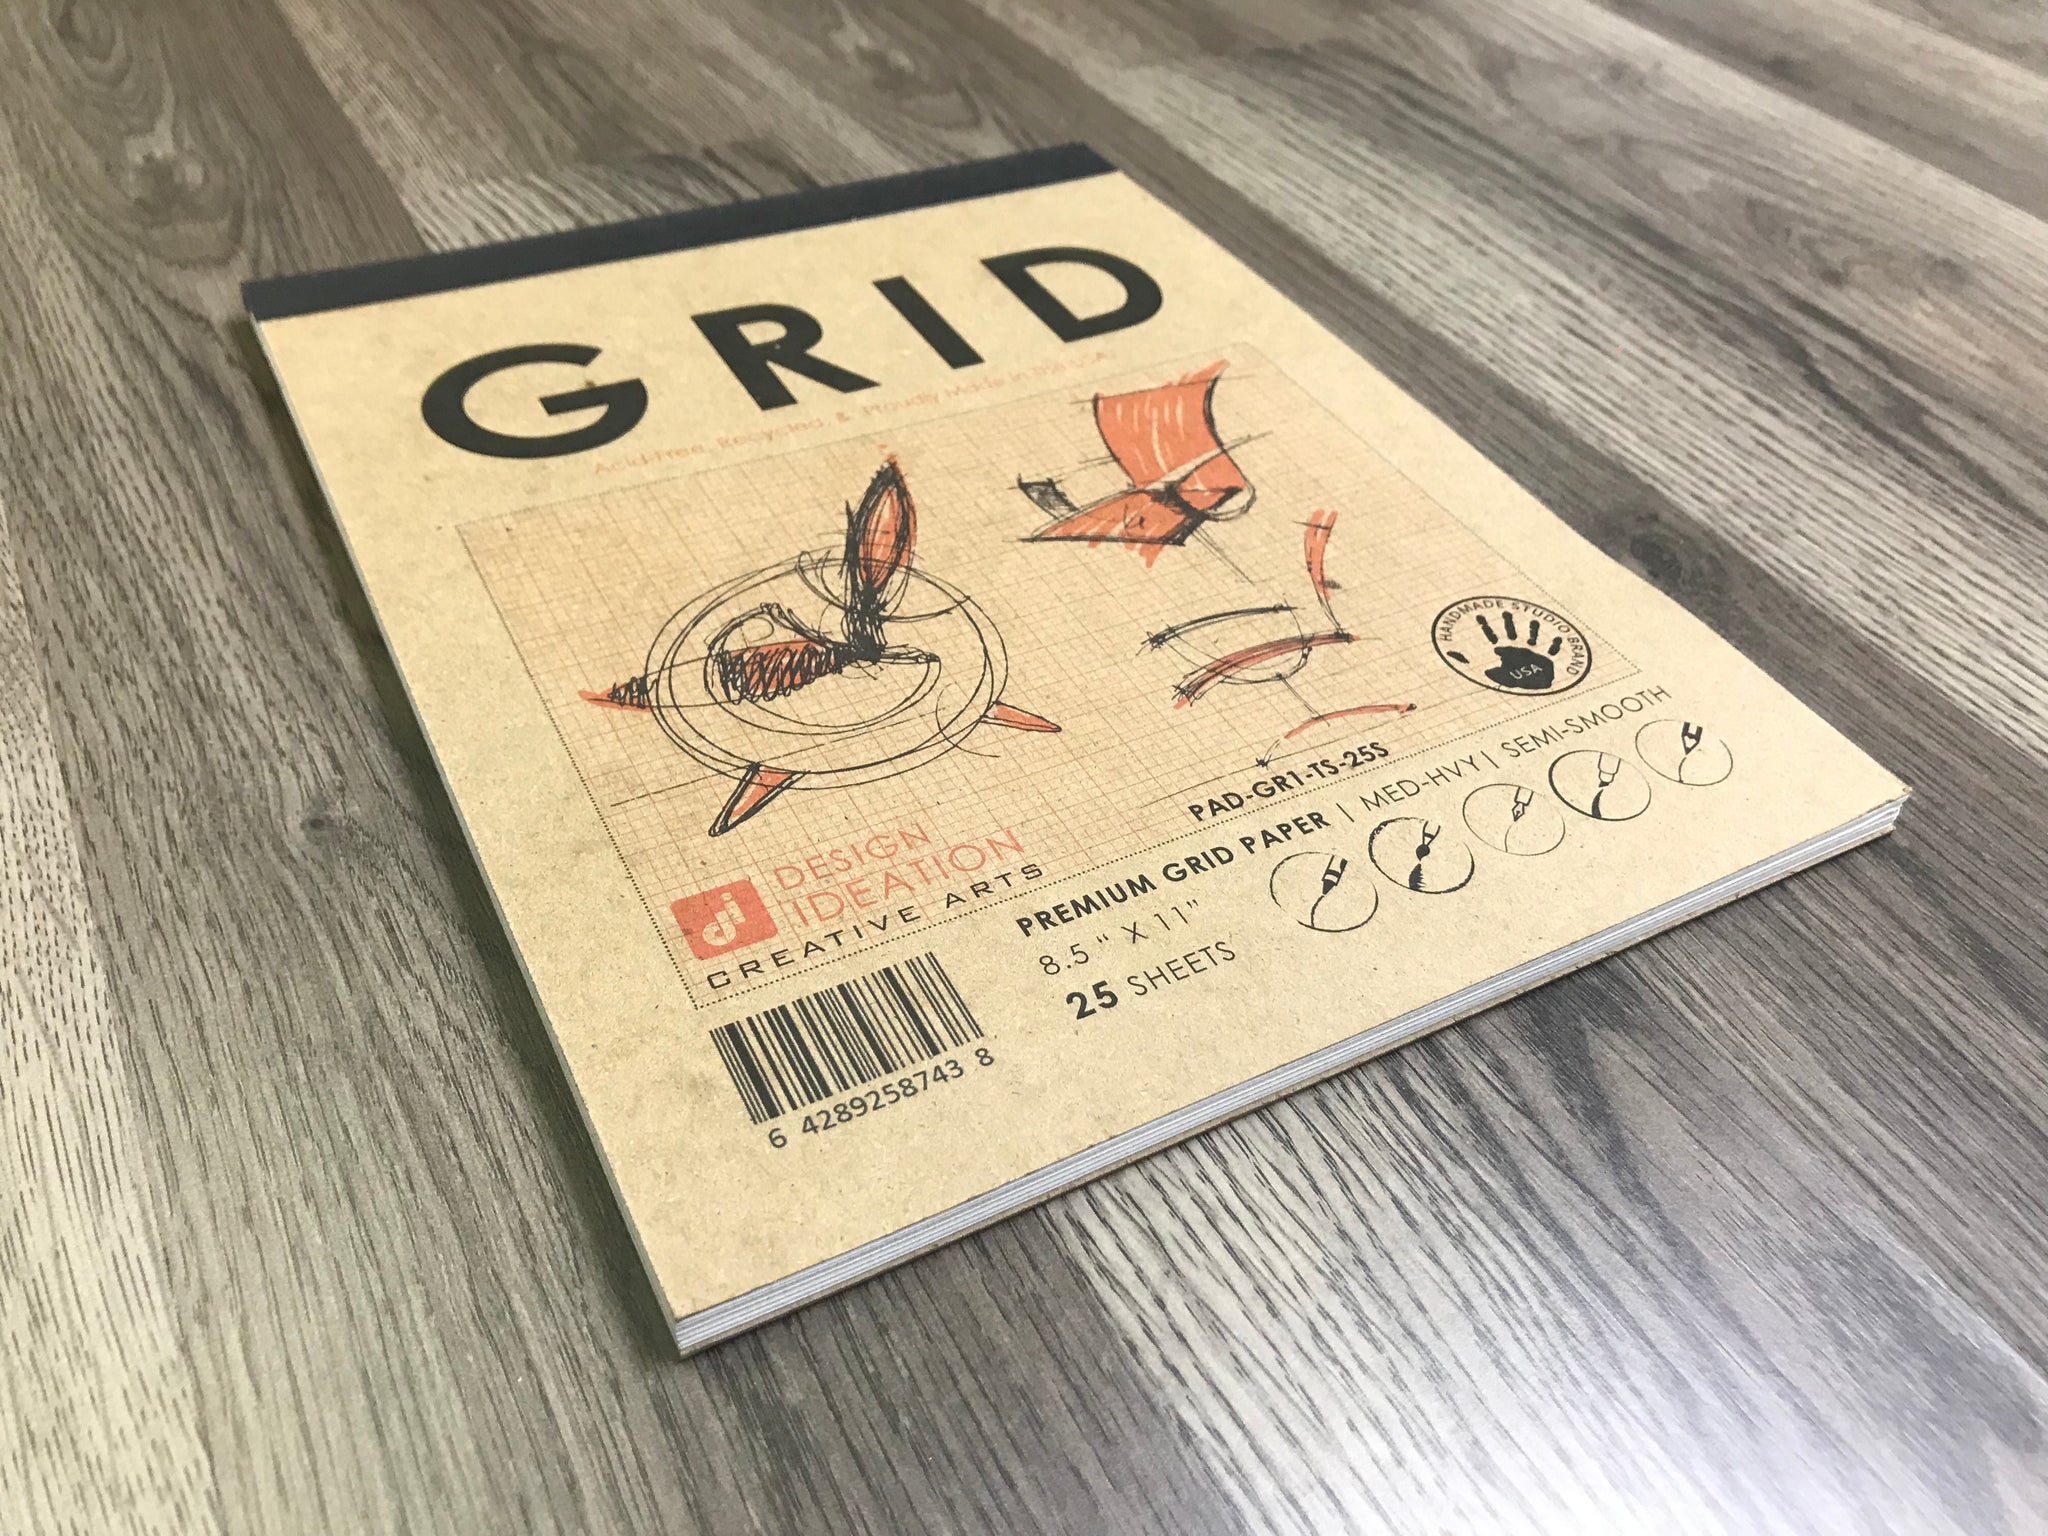 GRID PAD : Removable Sheet. Multi-Media. ORANGE GRID (8.5 x 11) – Design  Ideation Studio